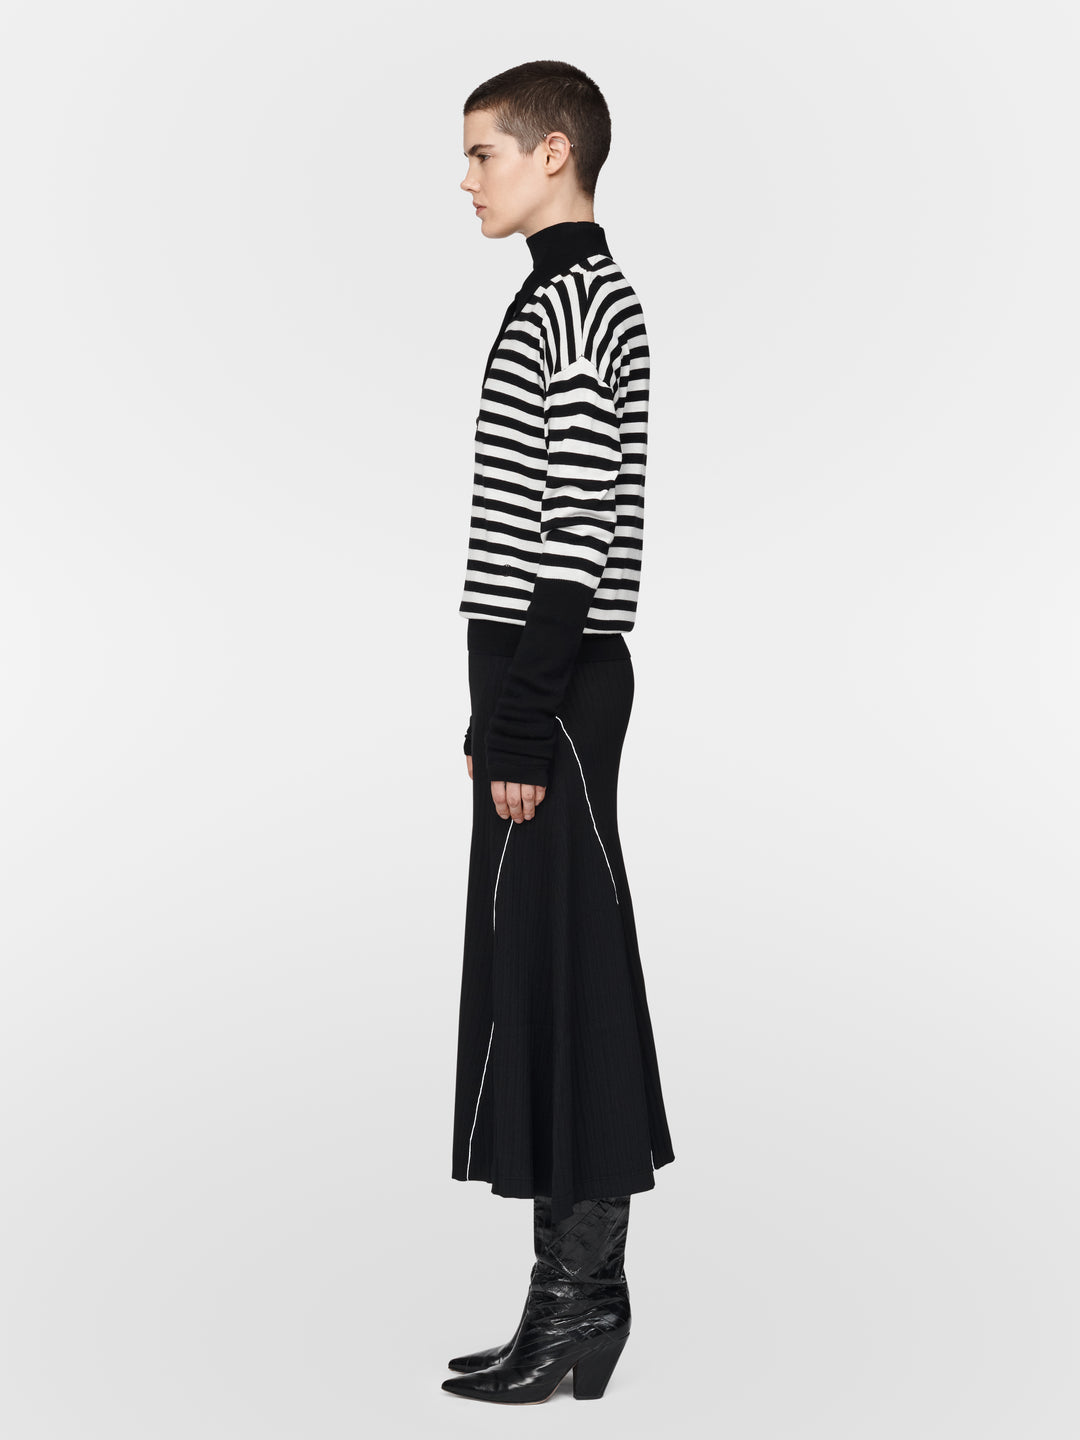 Maria McManus Black Stripe Polo Sweater